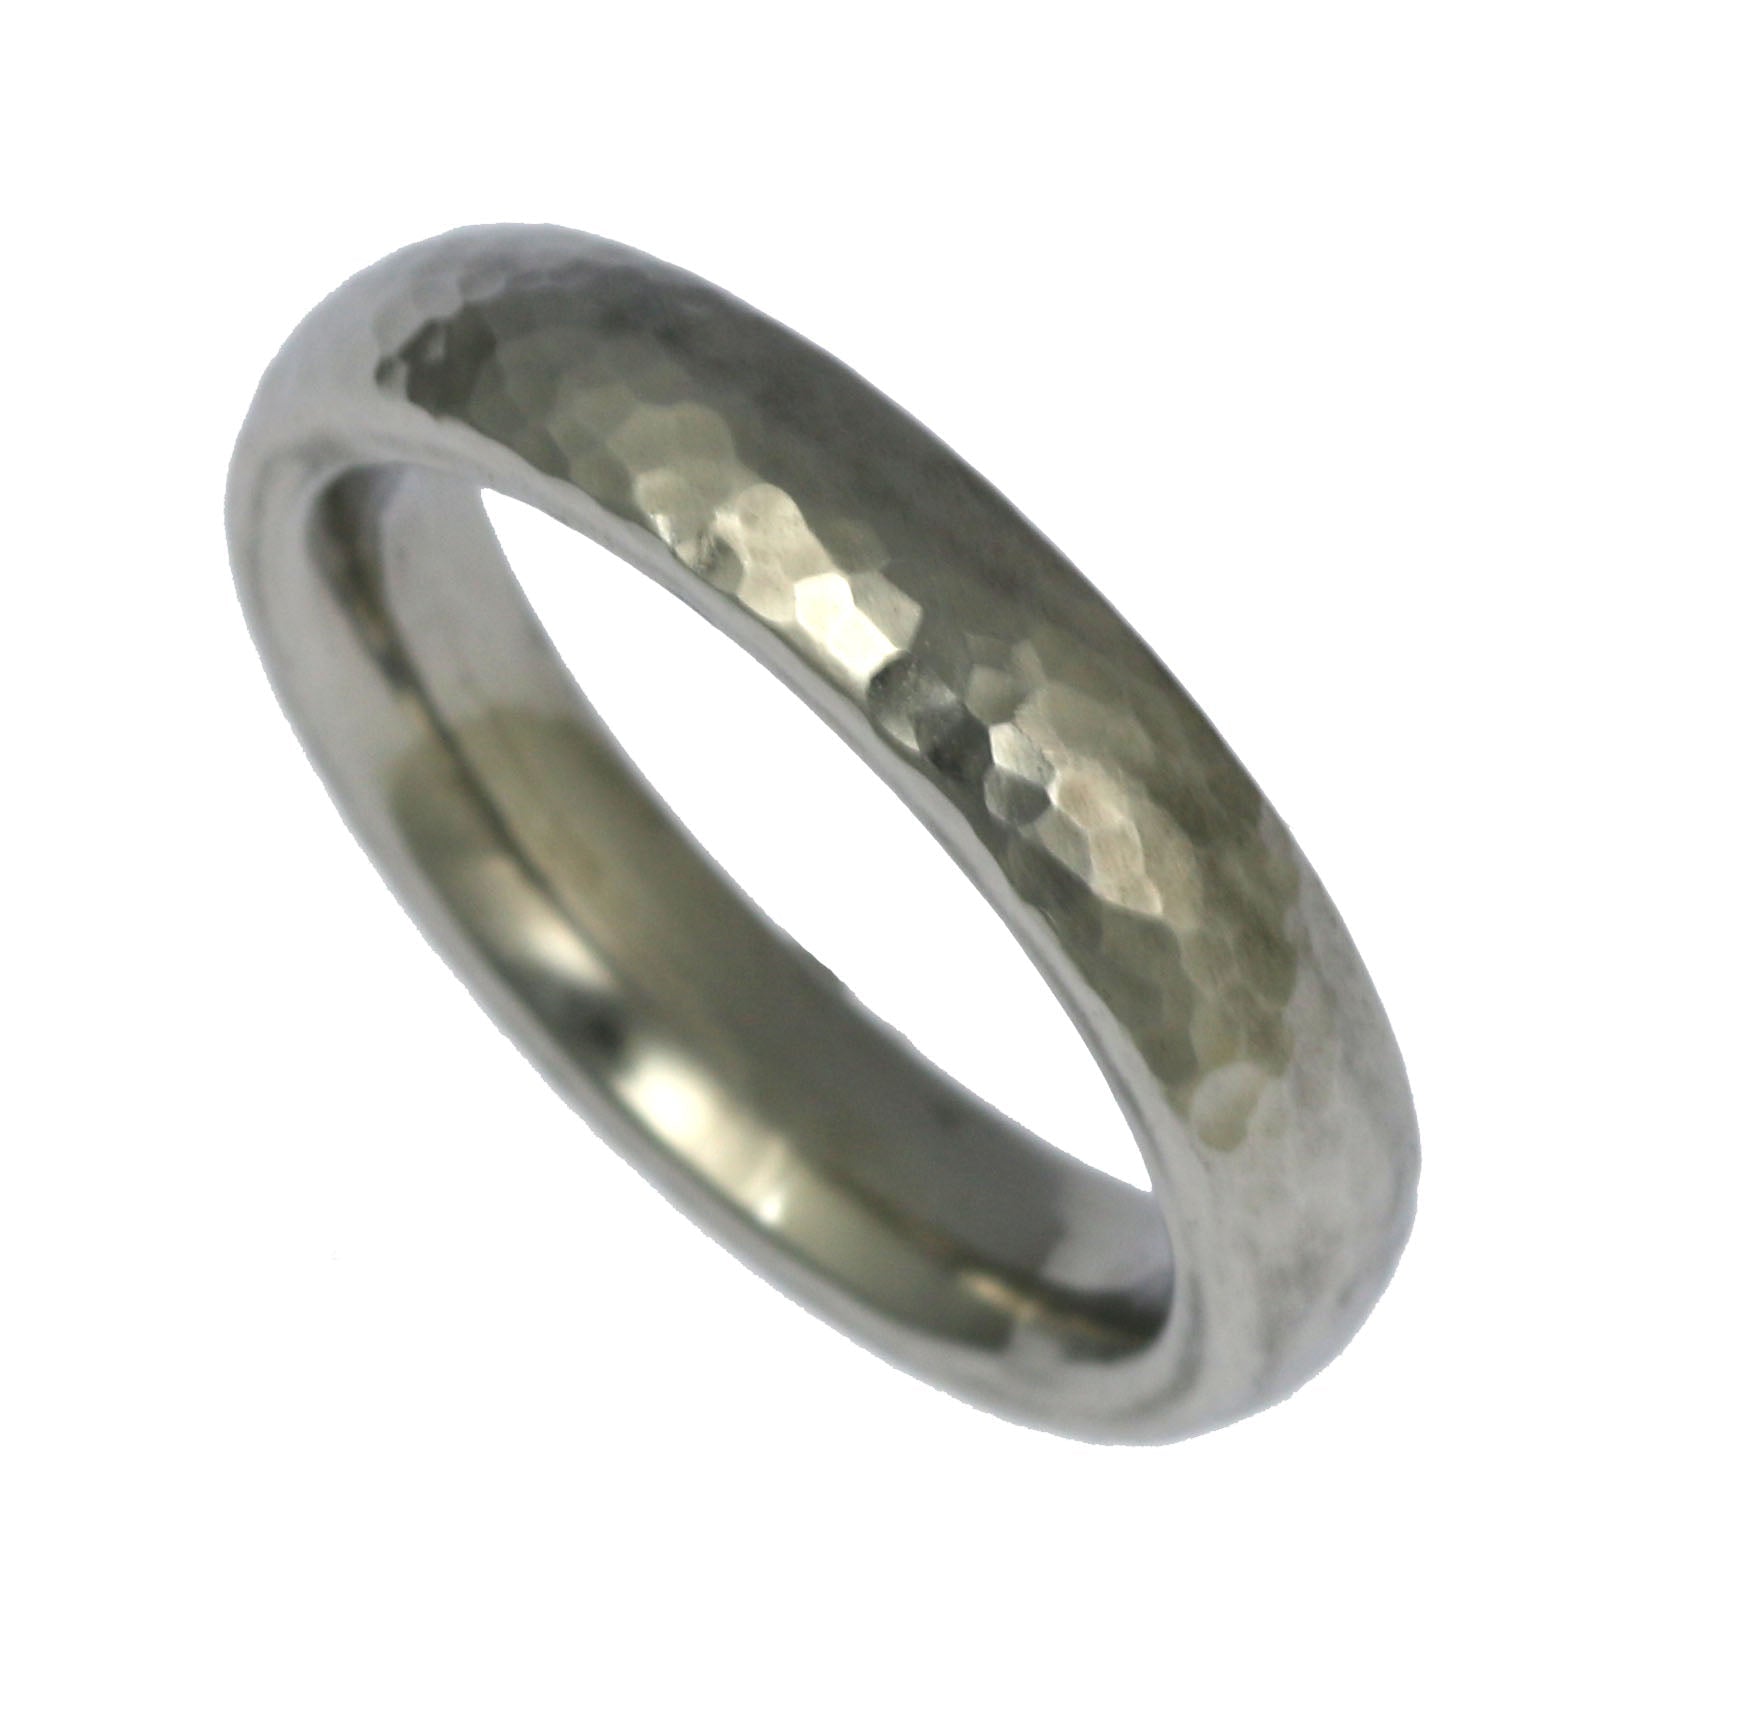 Rings - 5mm Hammered Domed Stainless Steel Men's Ring